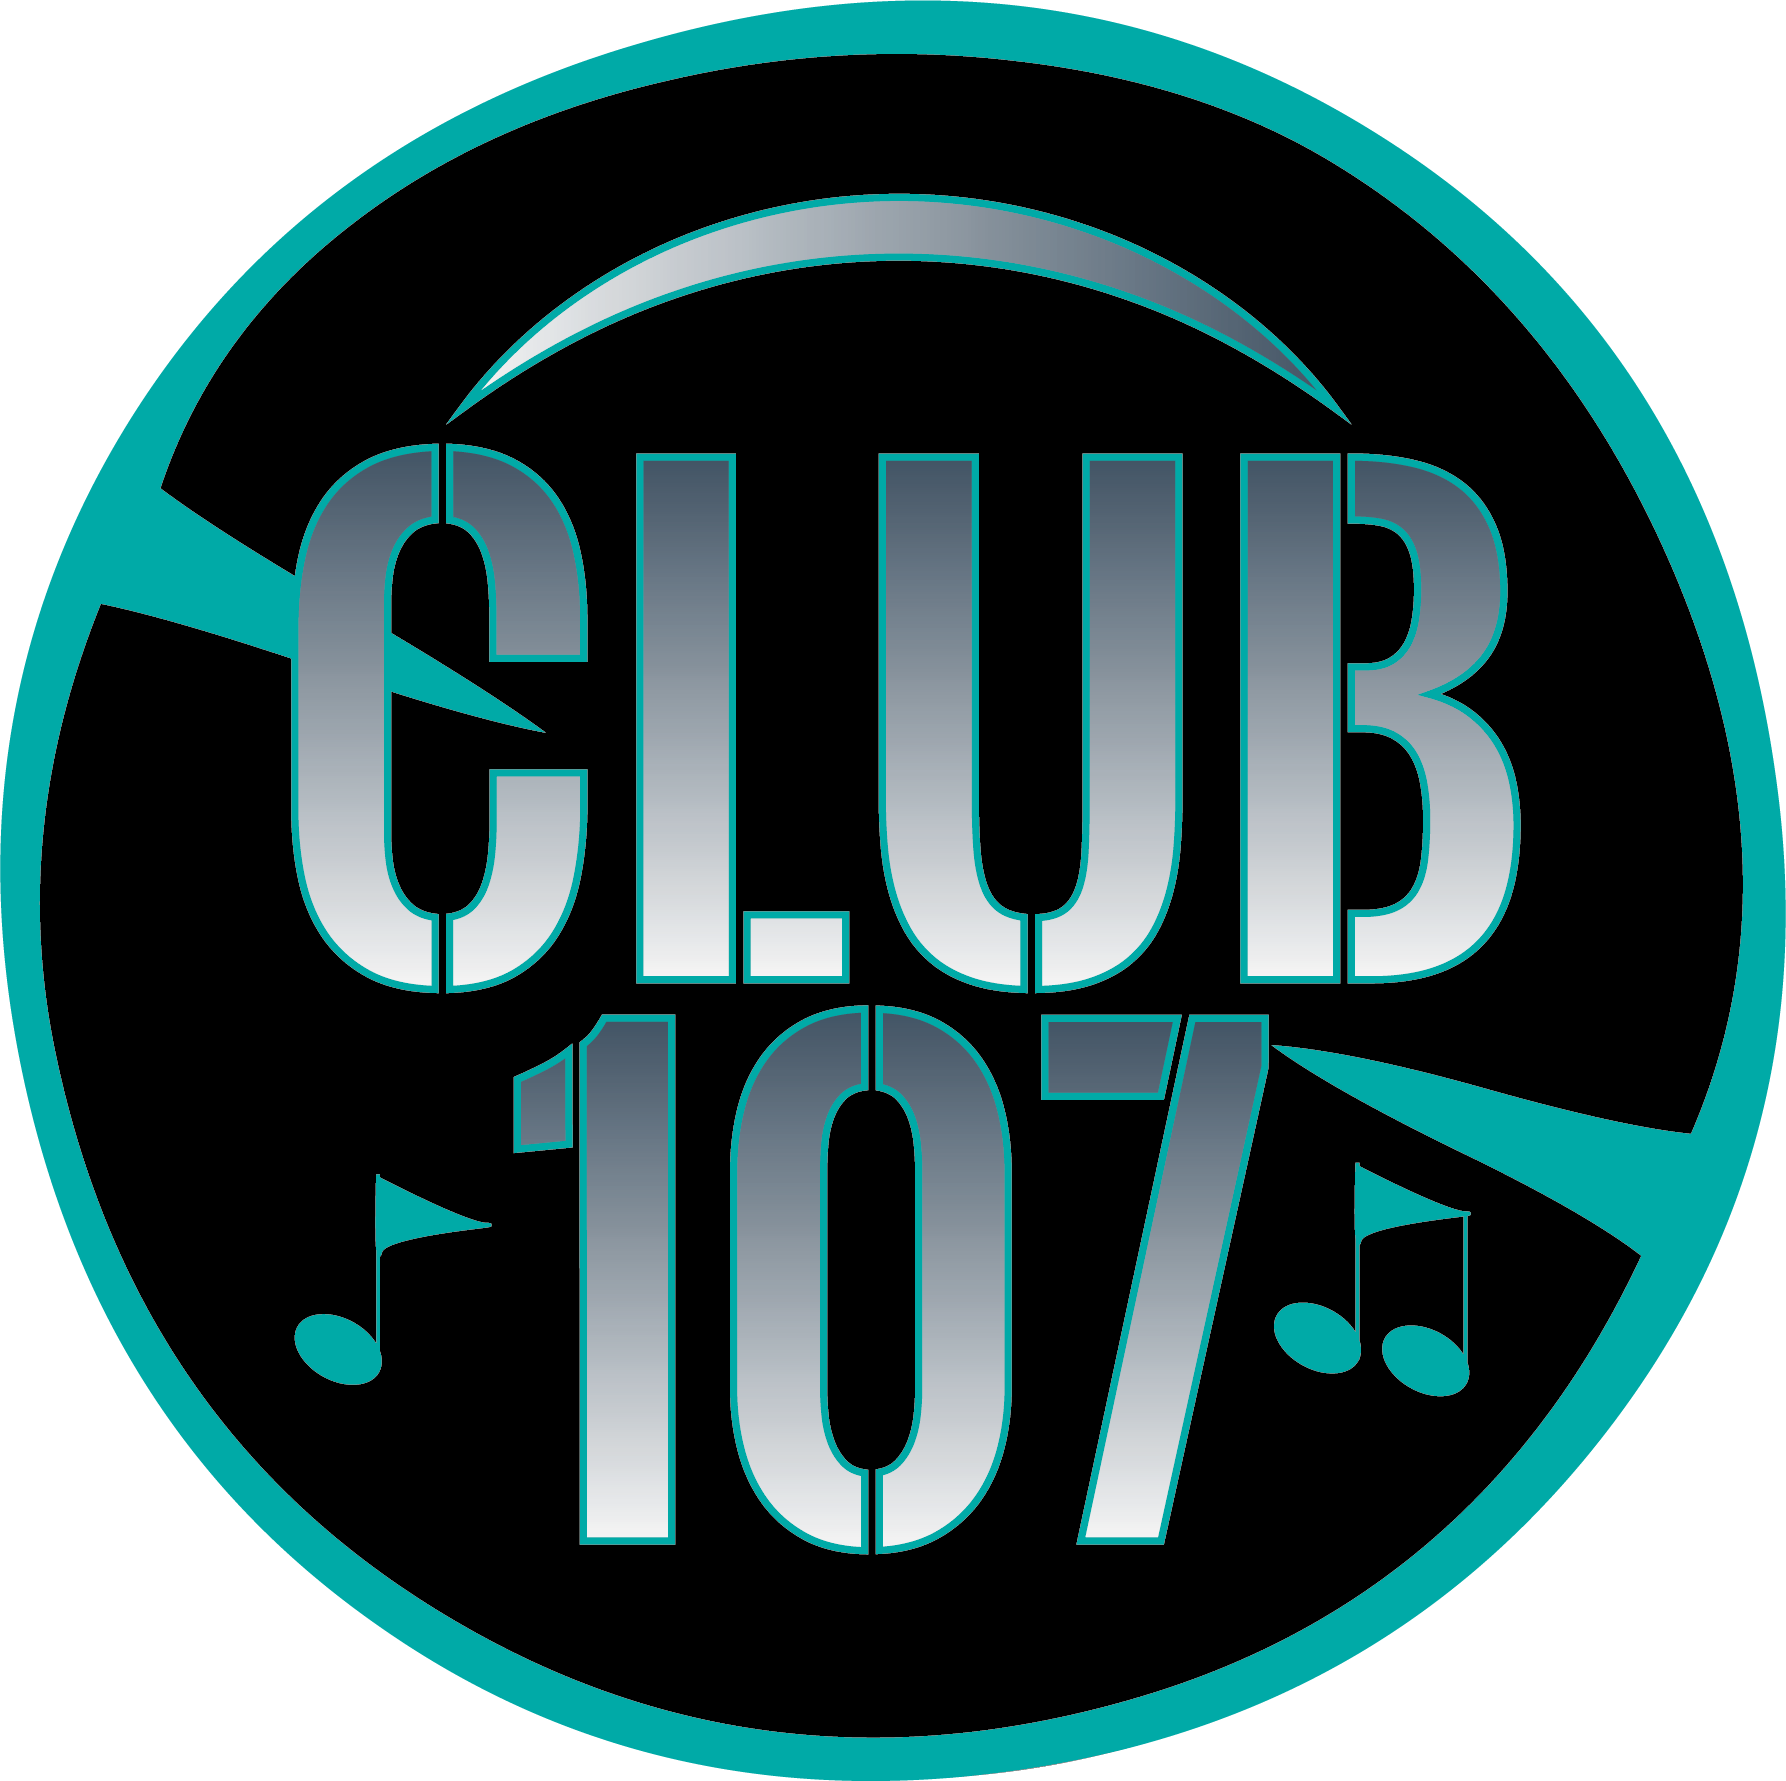 Inicia Club 107